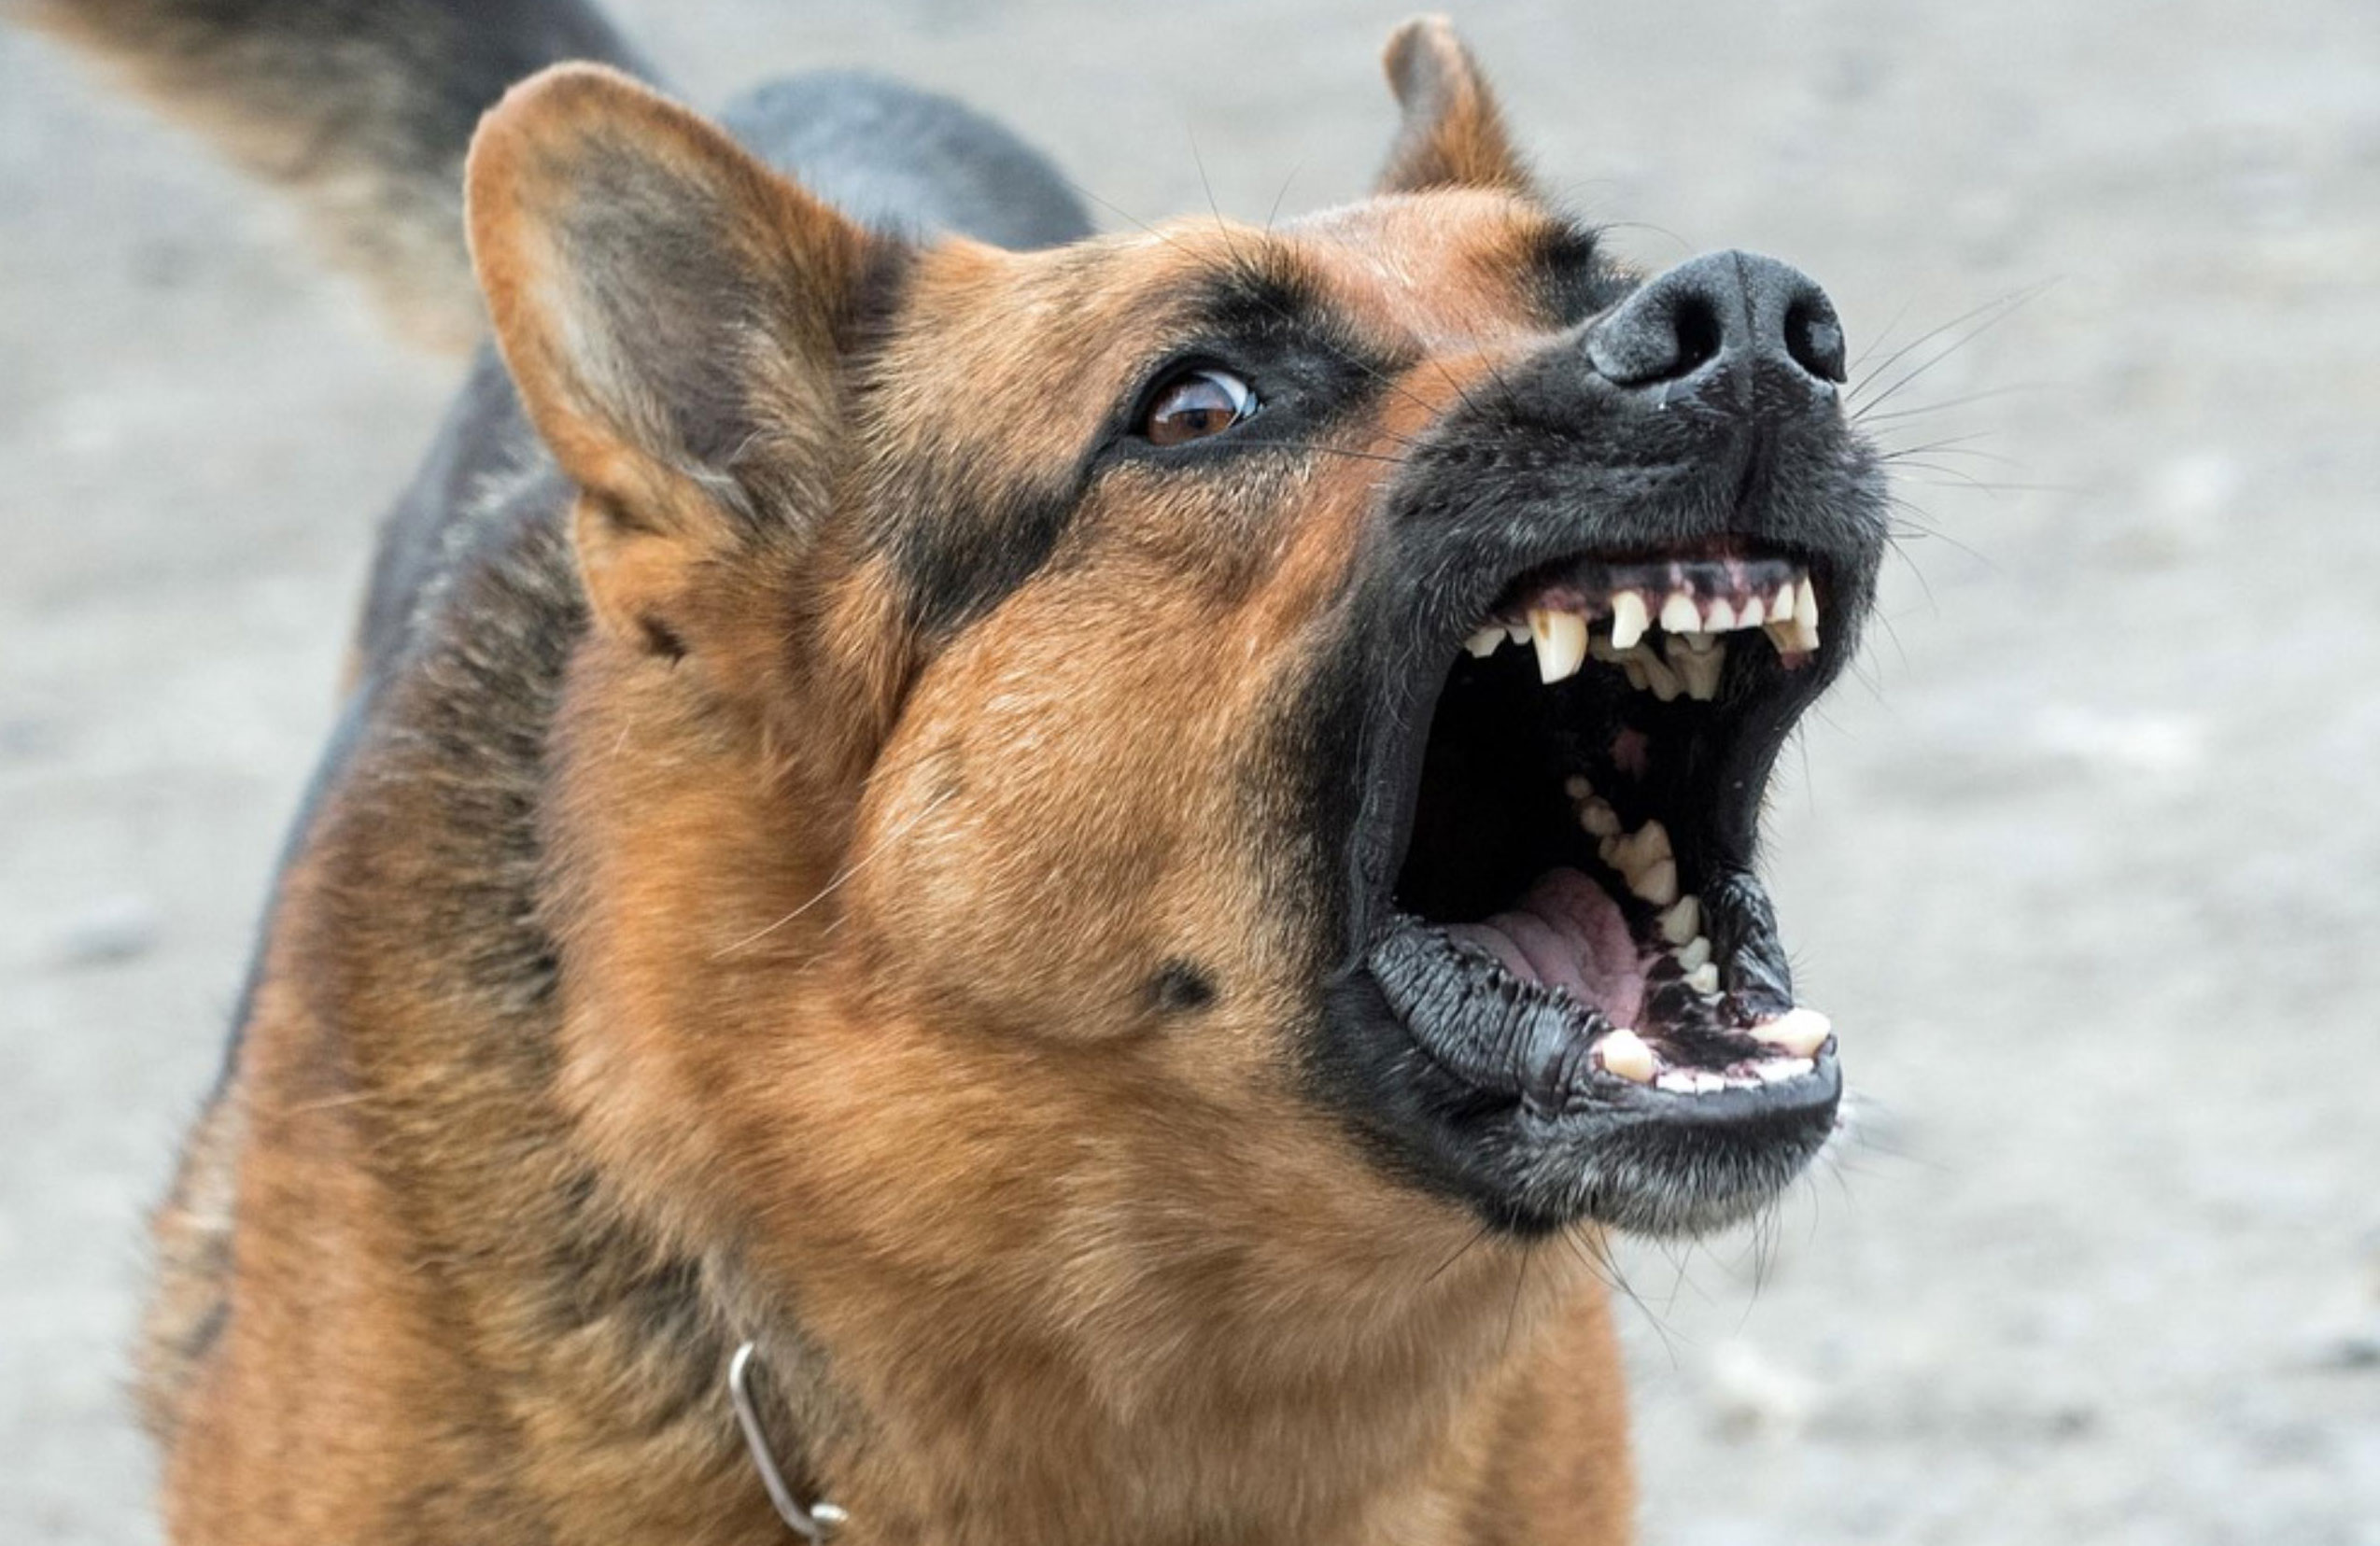 snarling german shepherd dog ready to bite